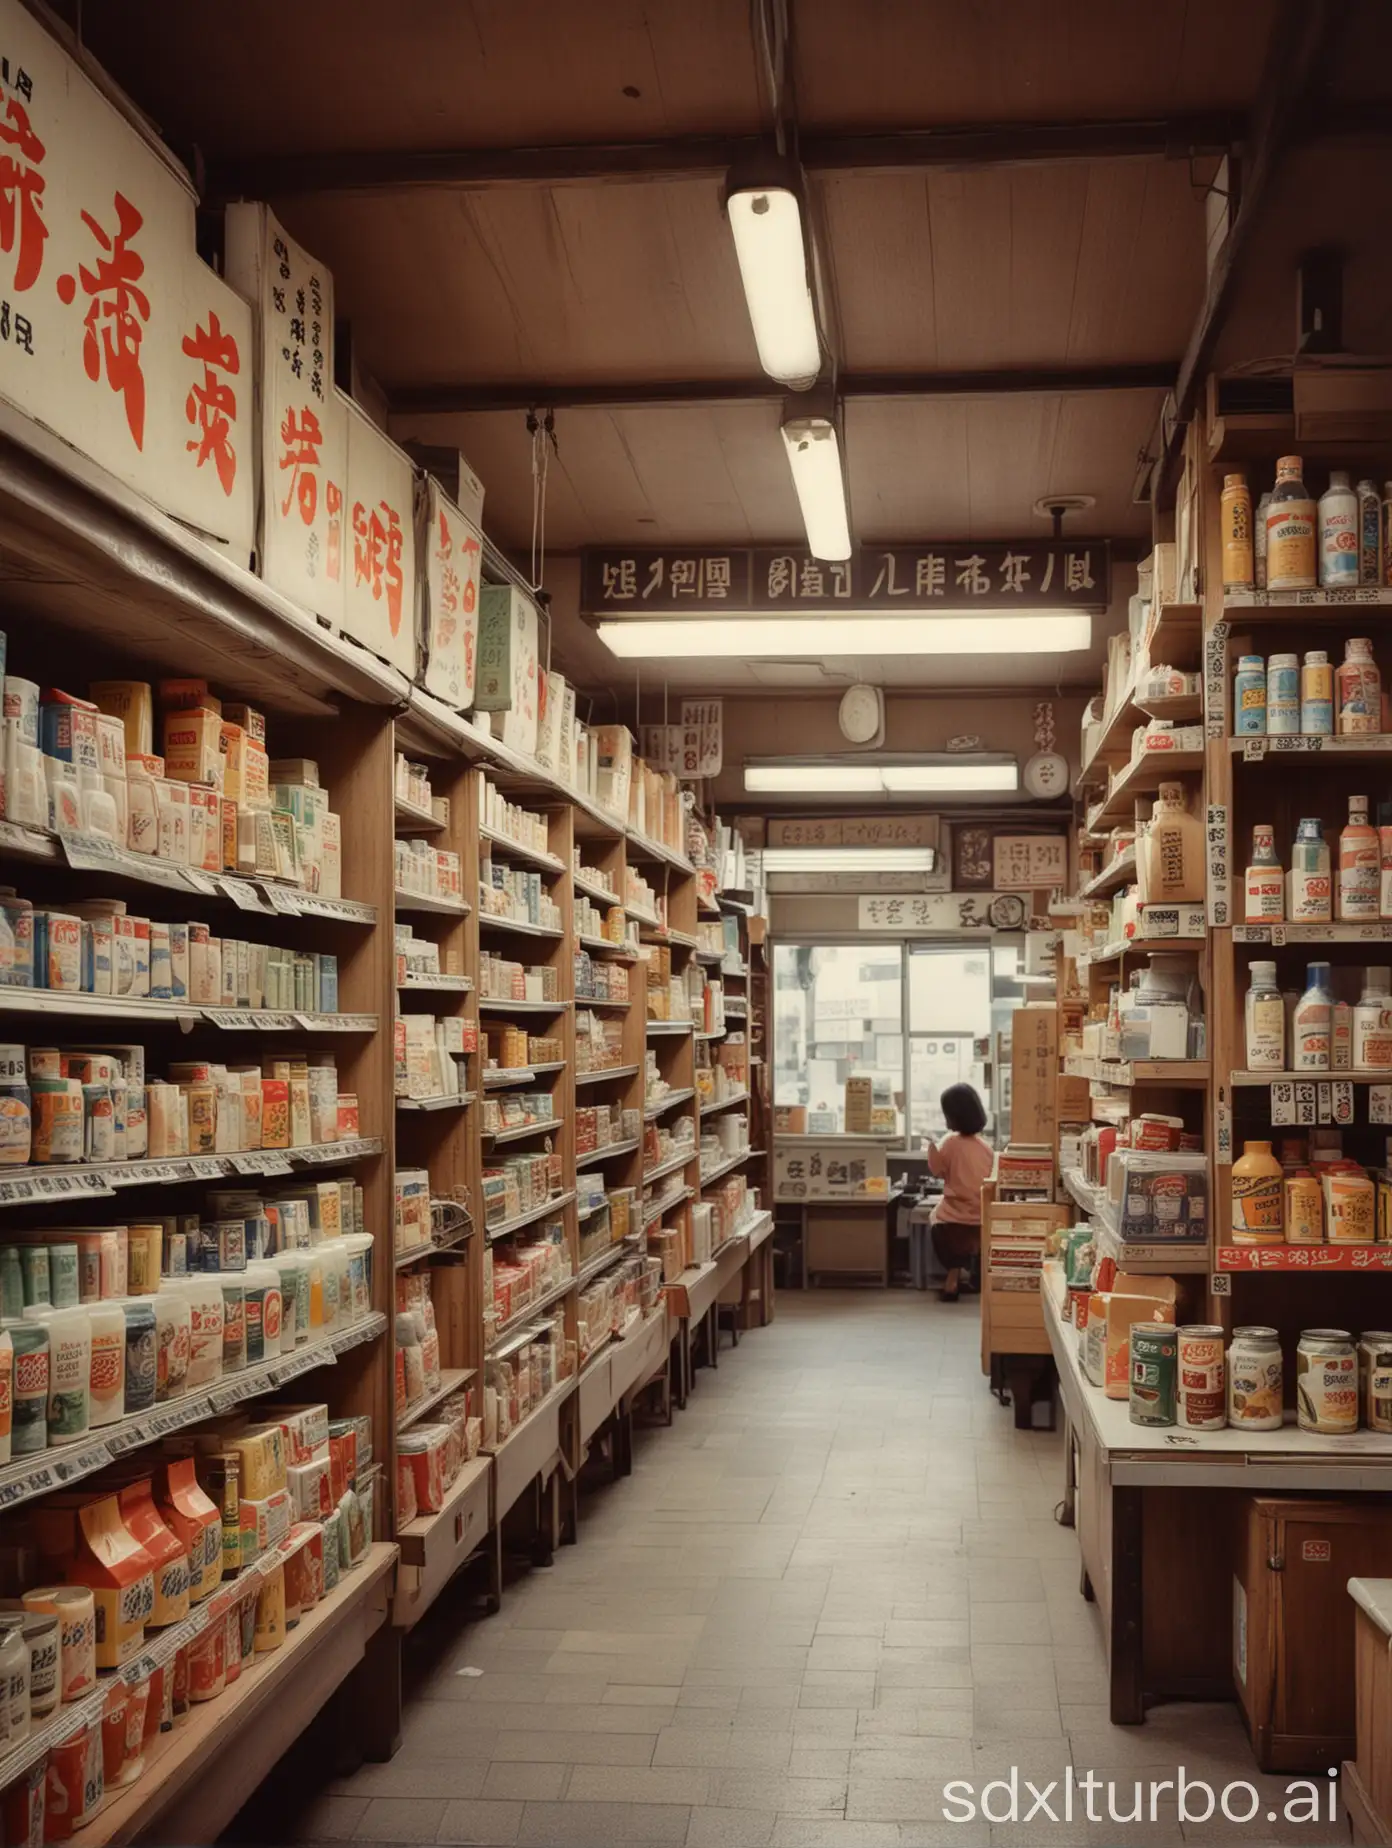 Nostalgic-Vintage-Japanese-Grocery-Store-Scene-from-1960s